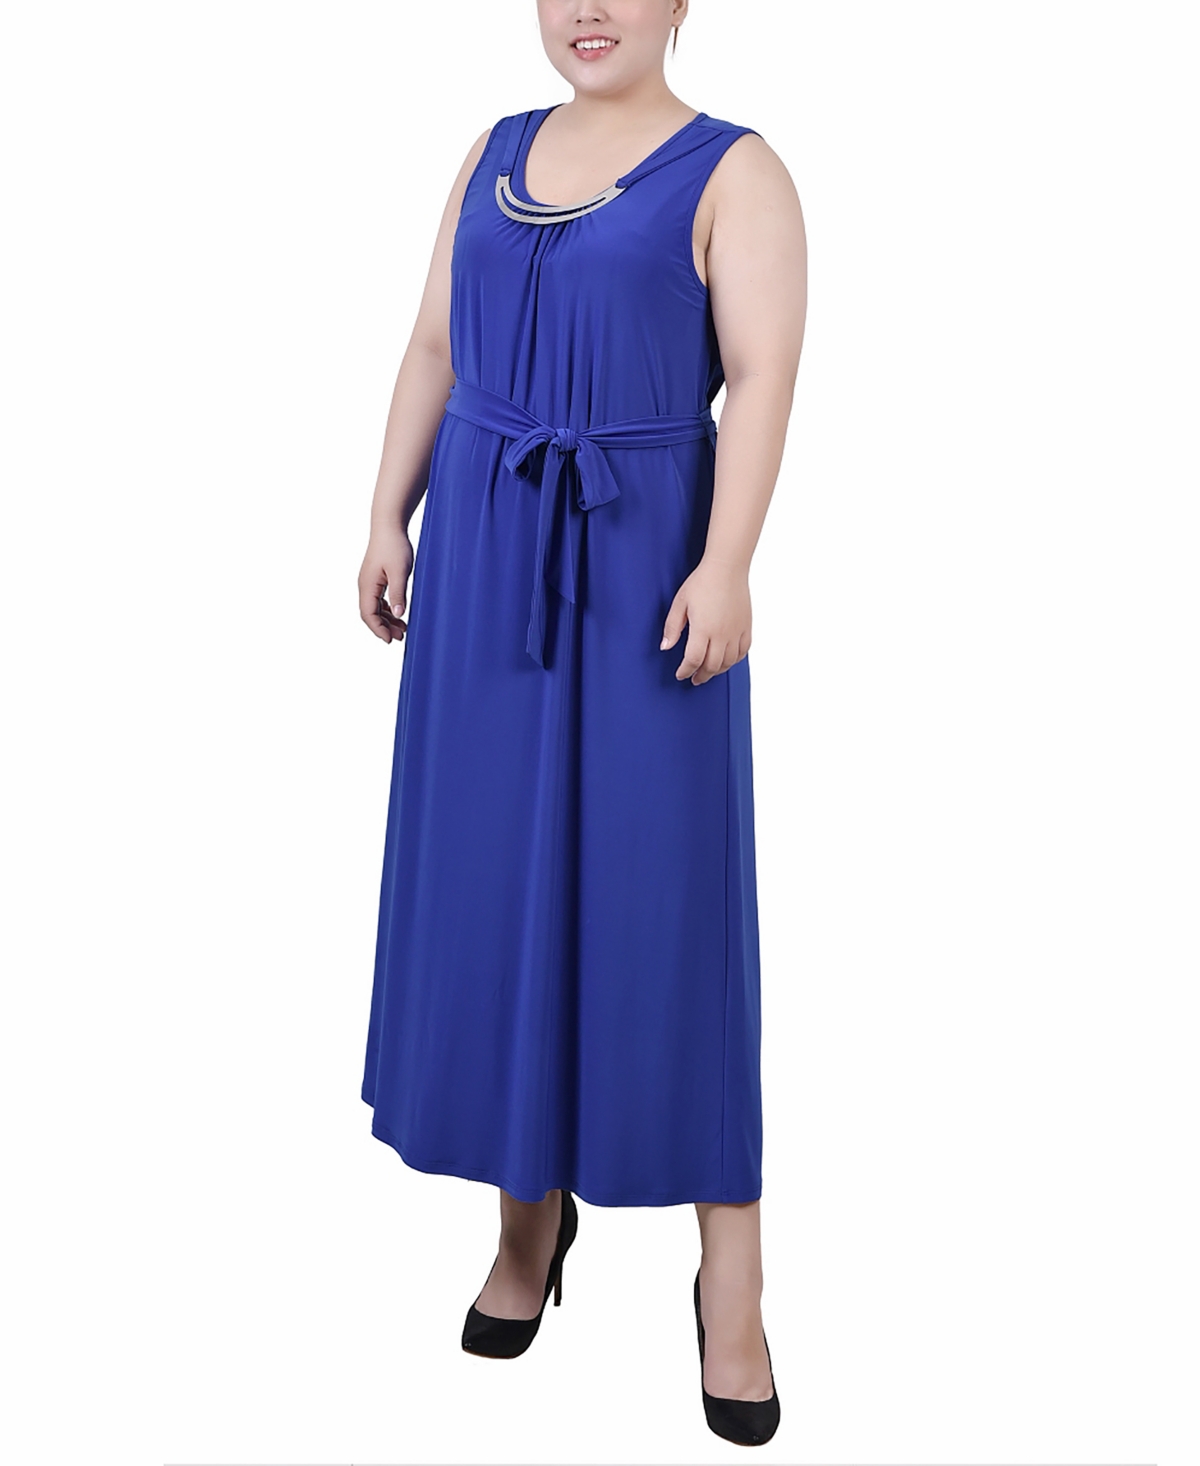 Plus Size Ankle Length Sleeveless Dress - Surf The Web